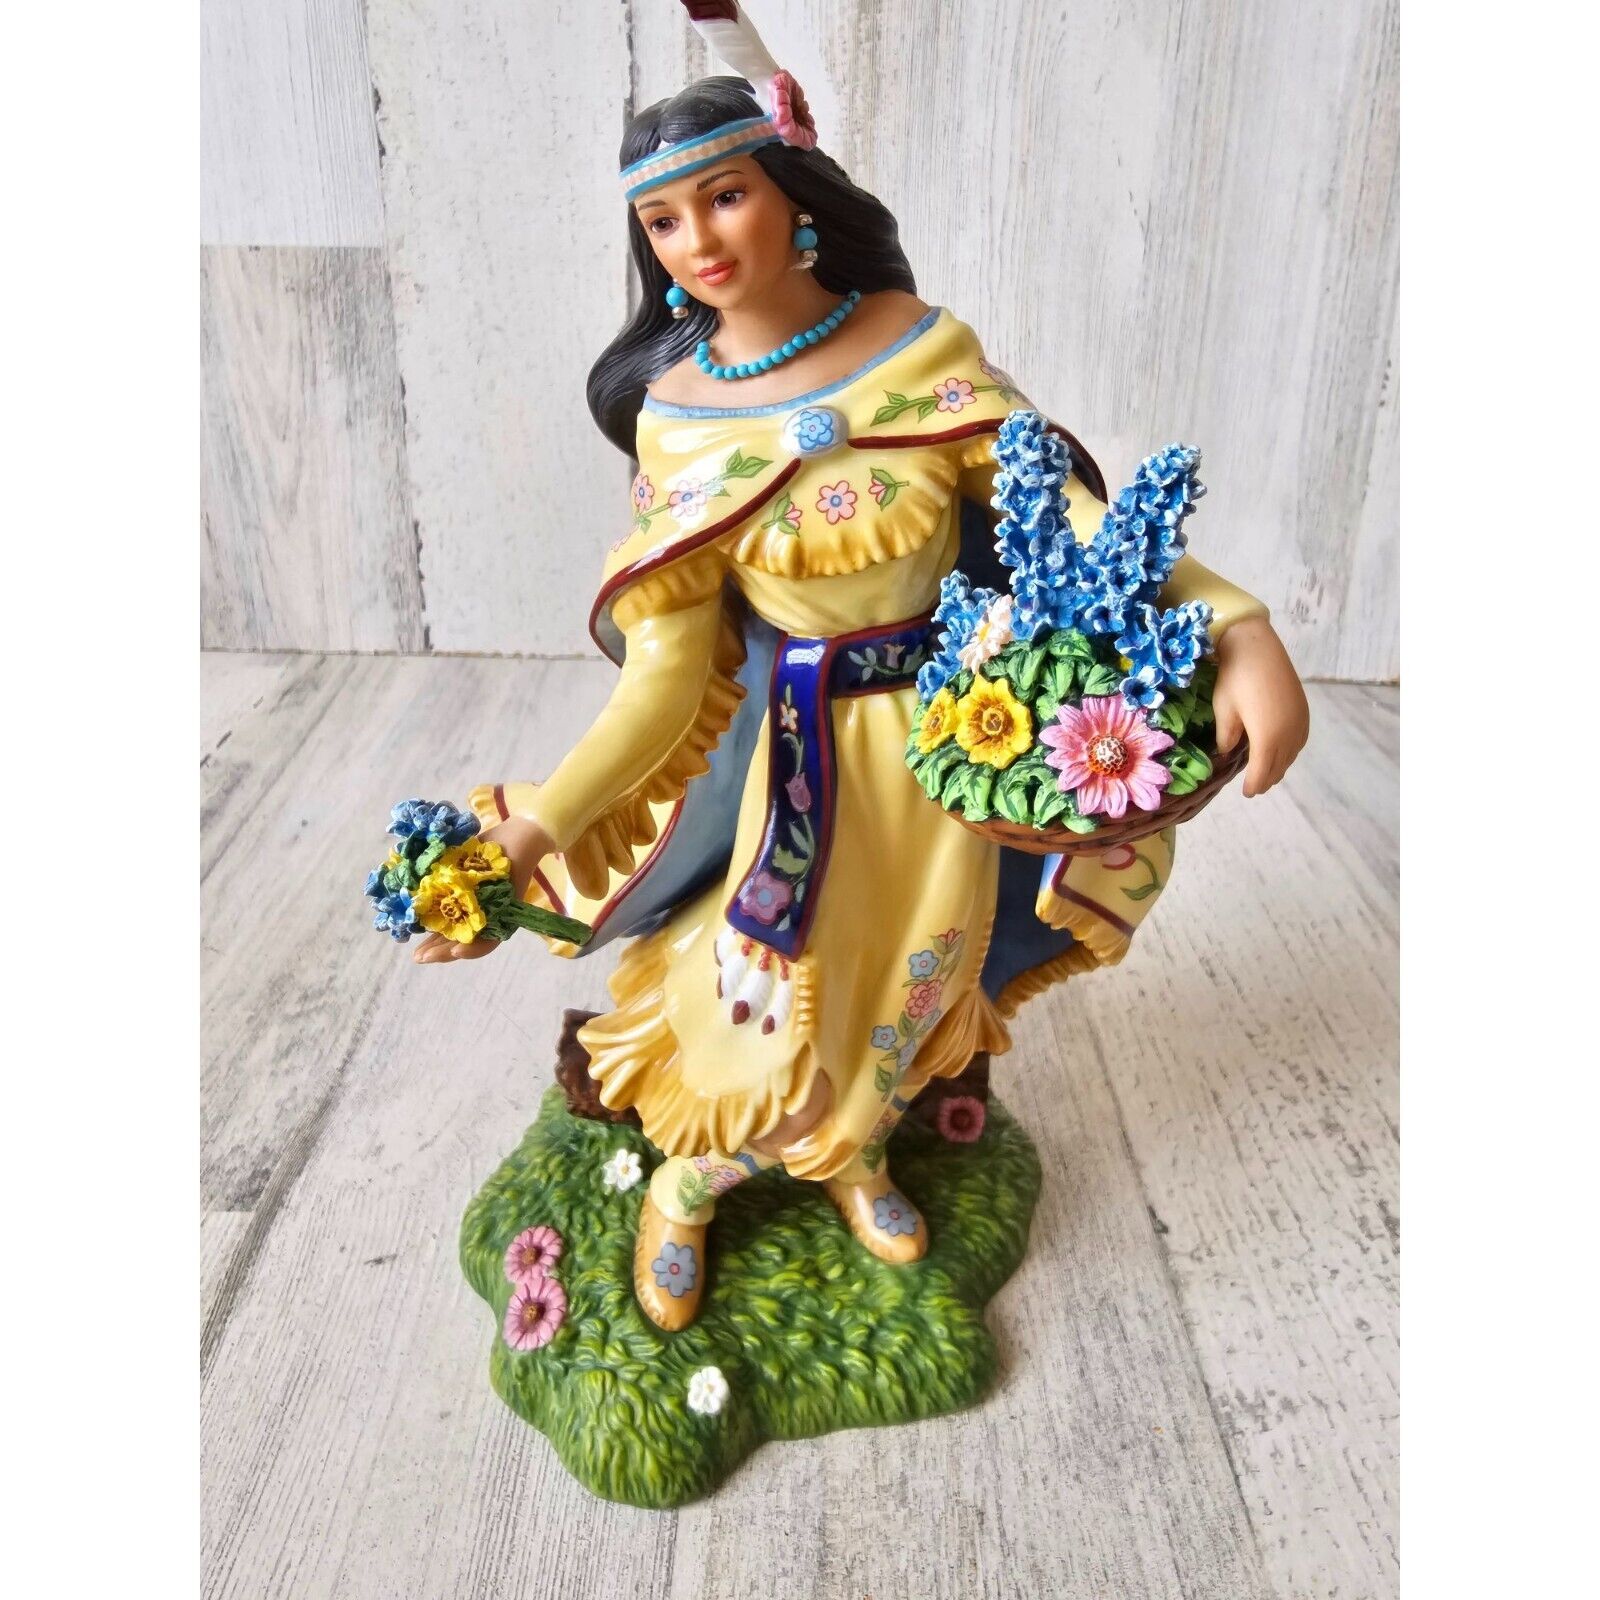 Danbury mint spring blossom Pocahontas RARE Indian statue figurine vintage flowe